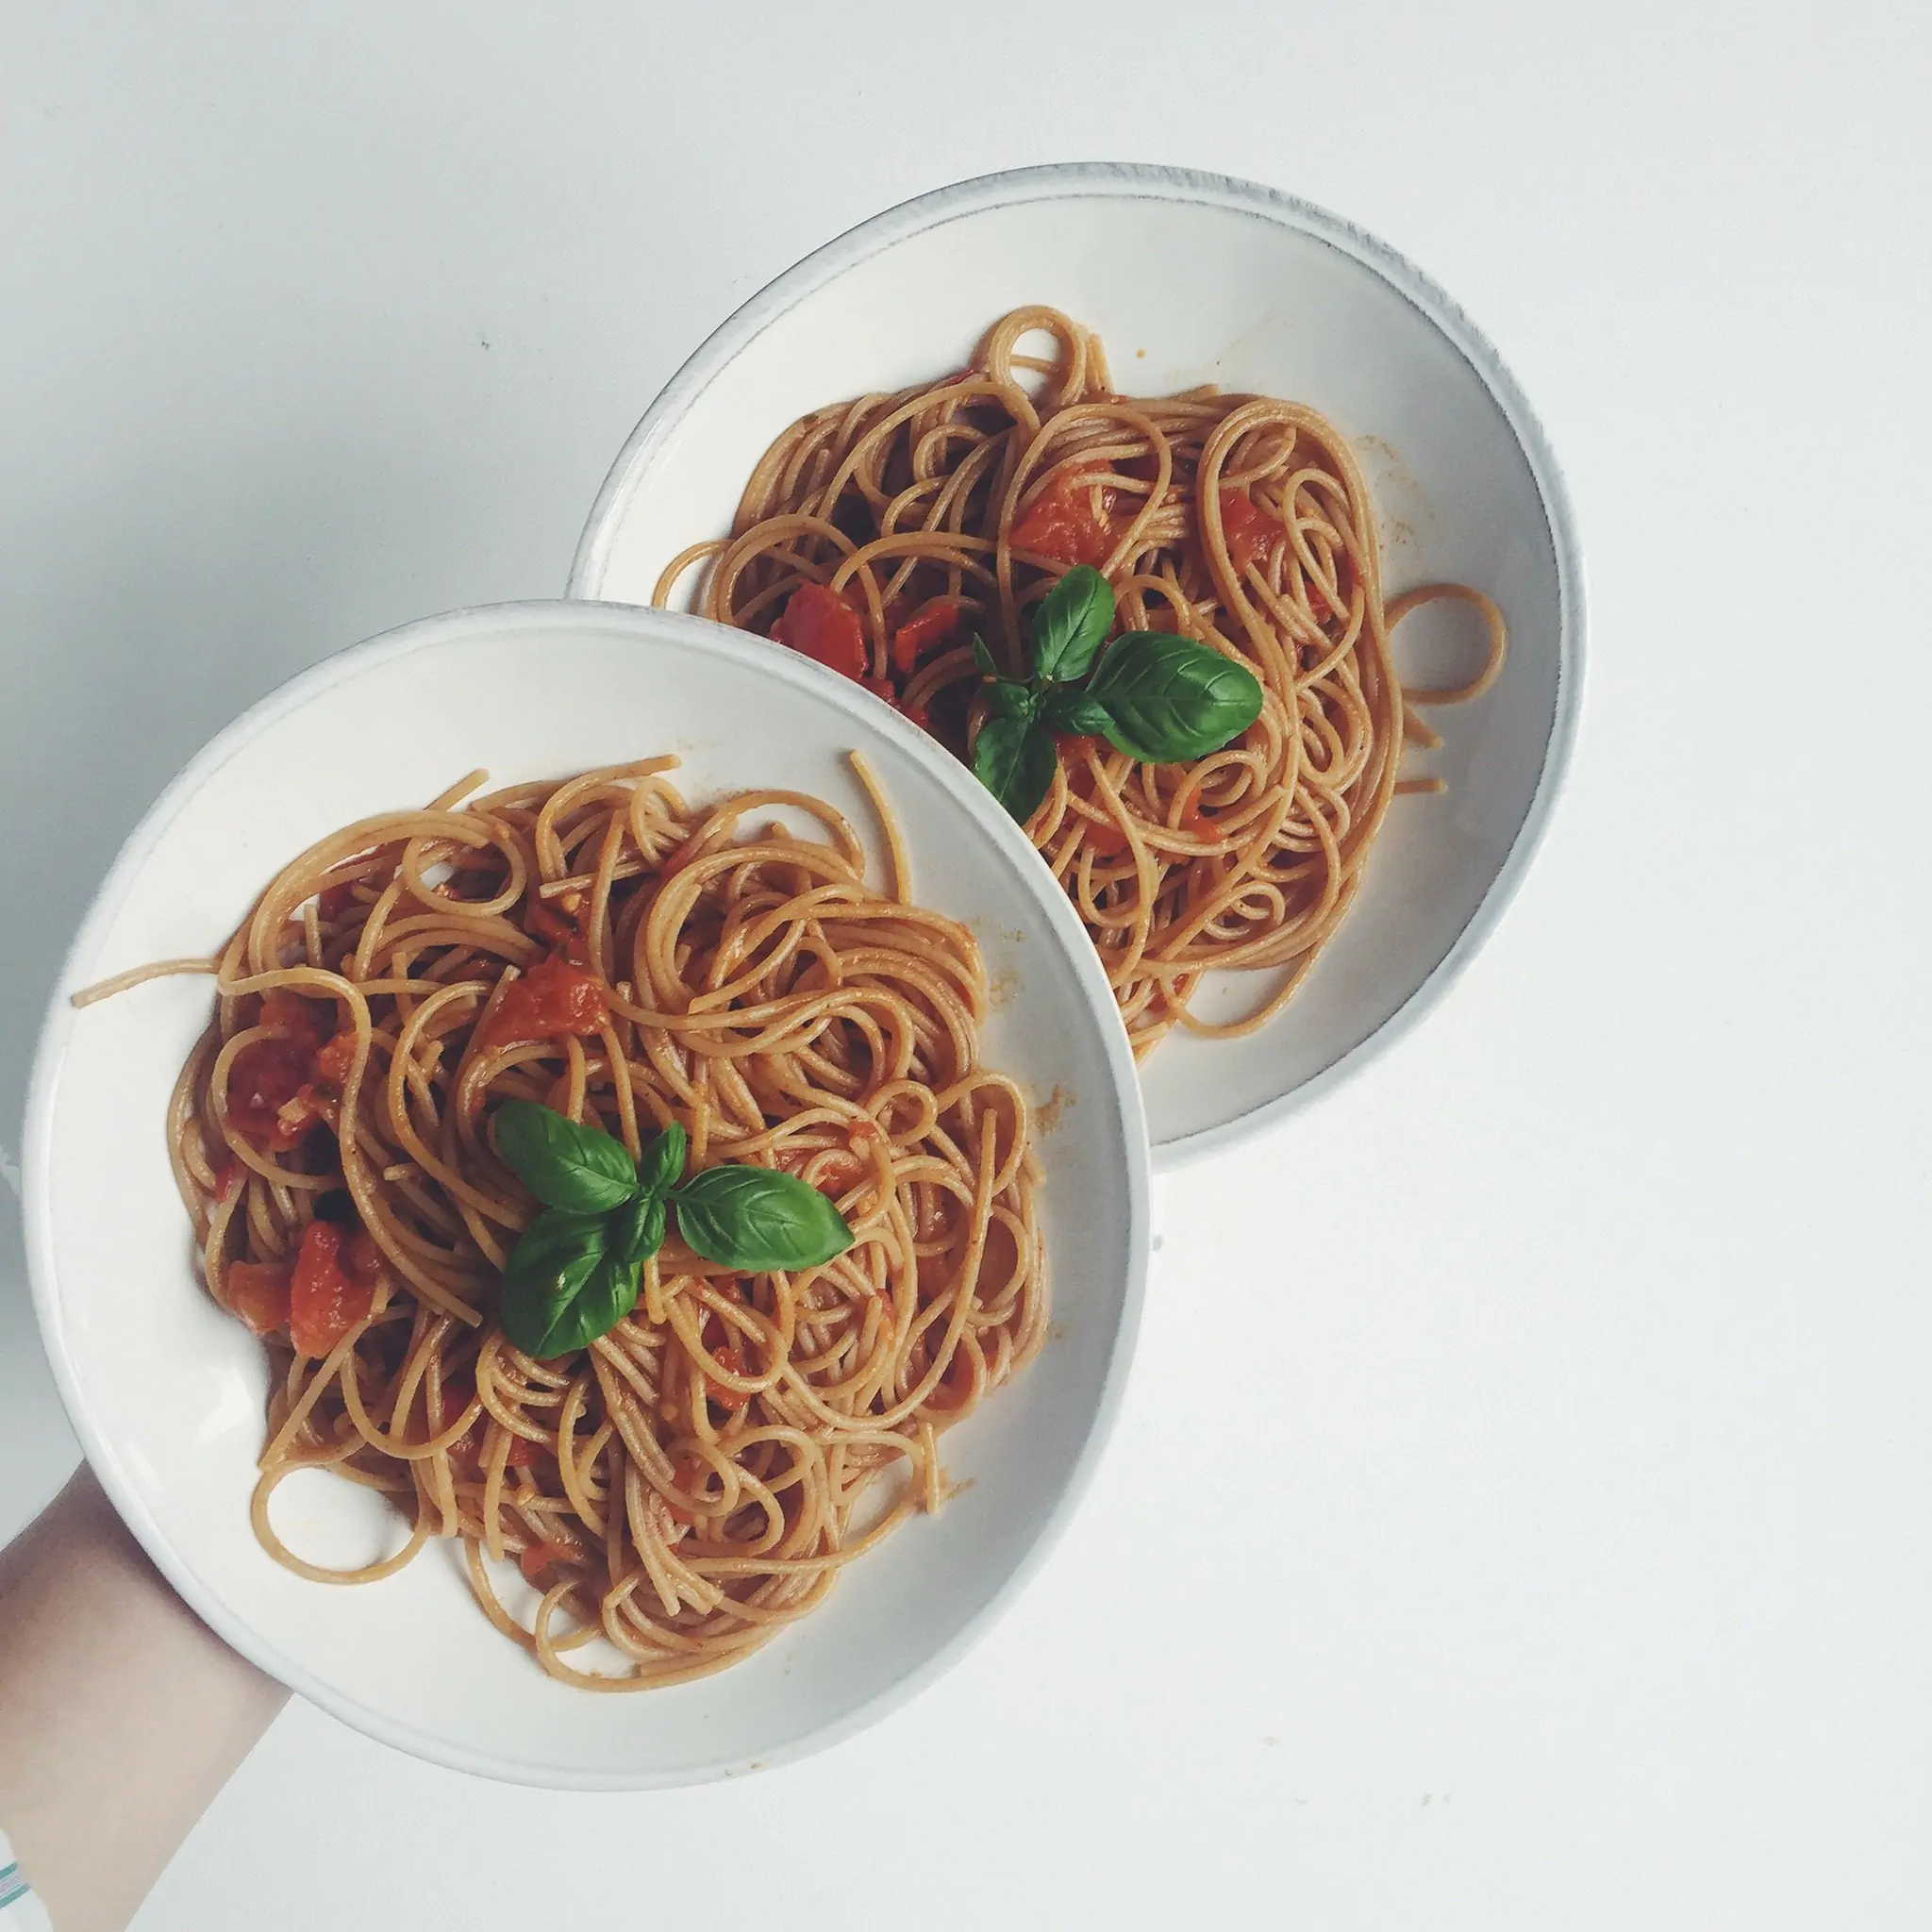 Spaghetti Farro Complète Blé Ancien